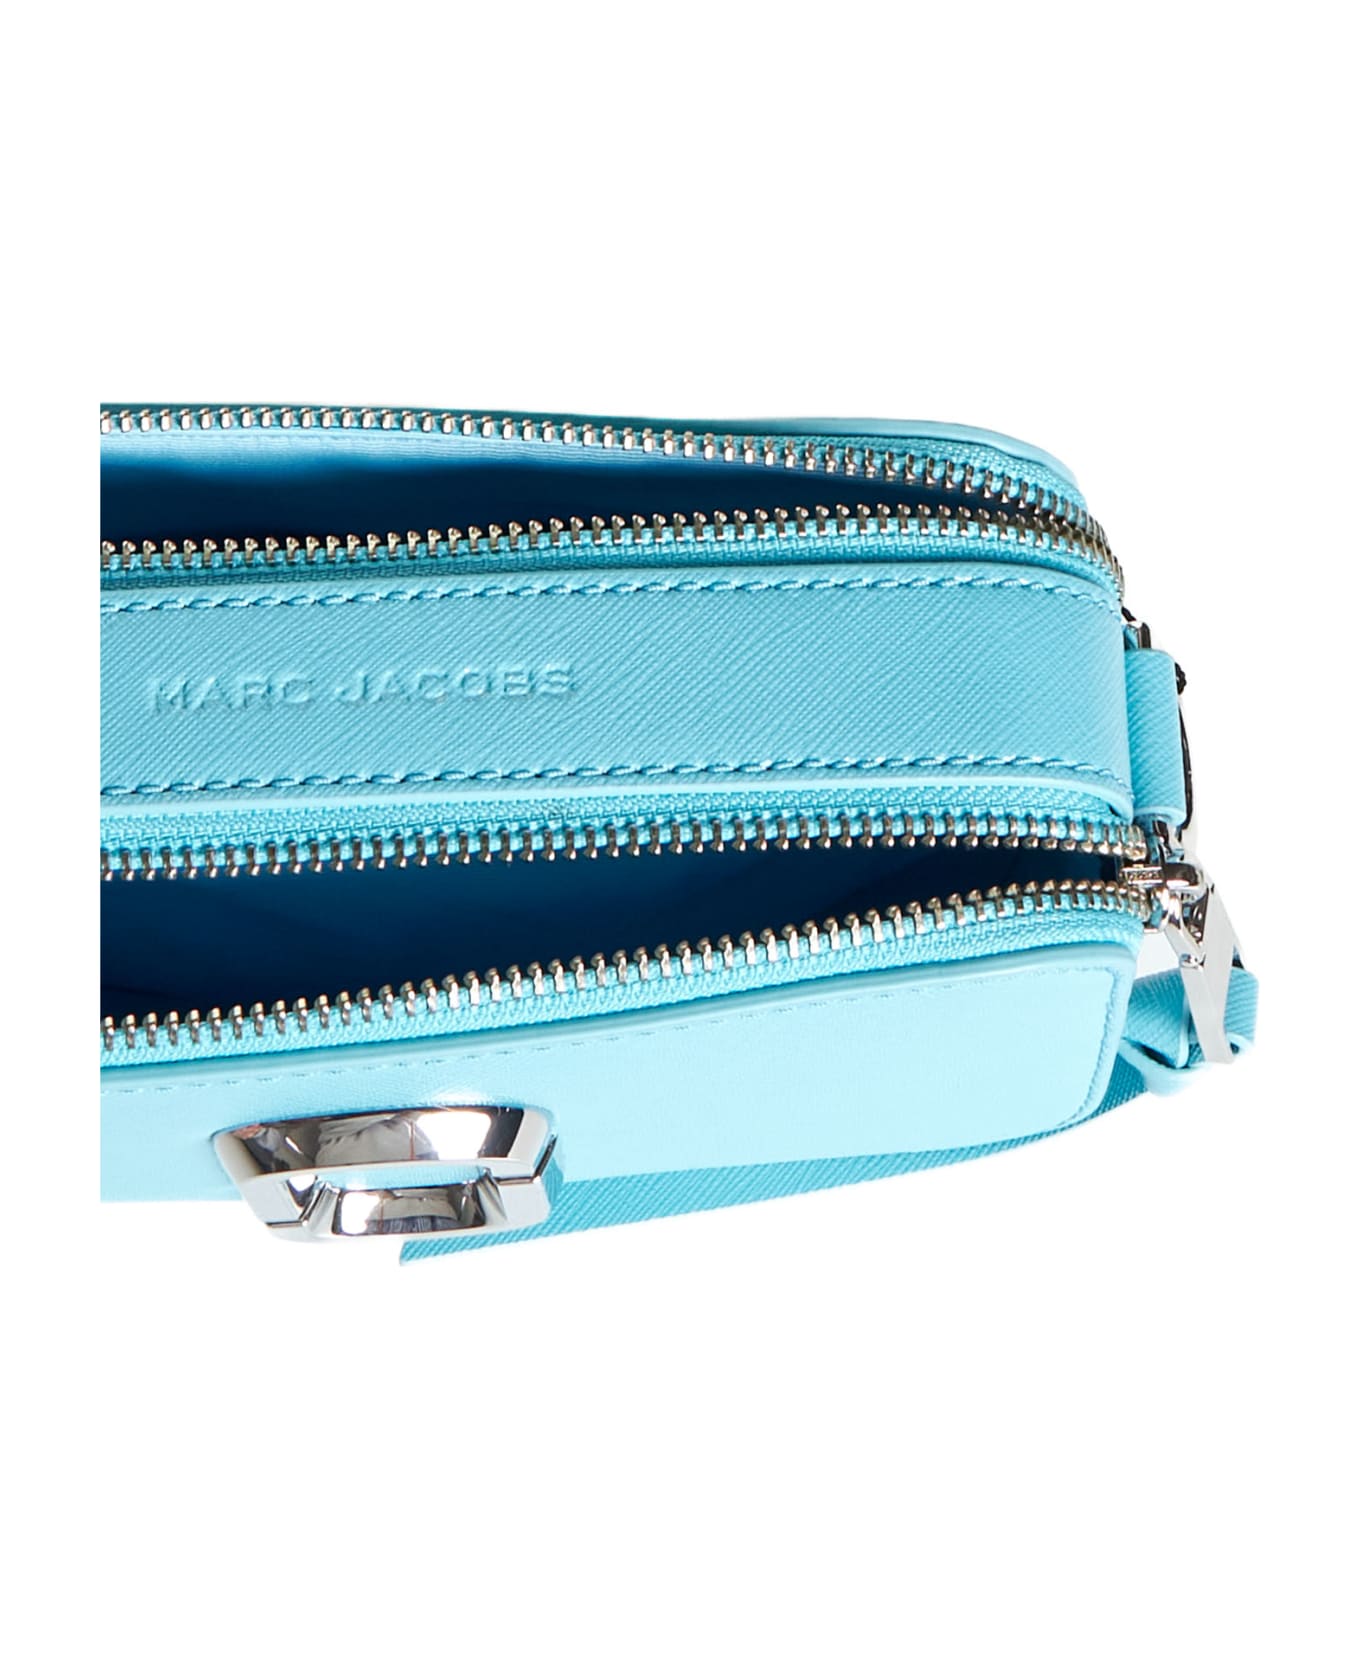 Marc Jacobs The Utility Snapshot Crossbody Bag - Light blue